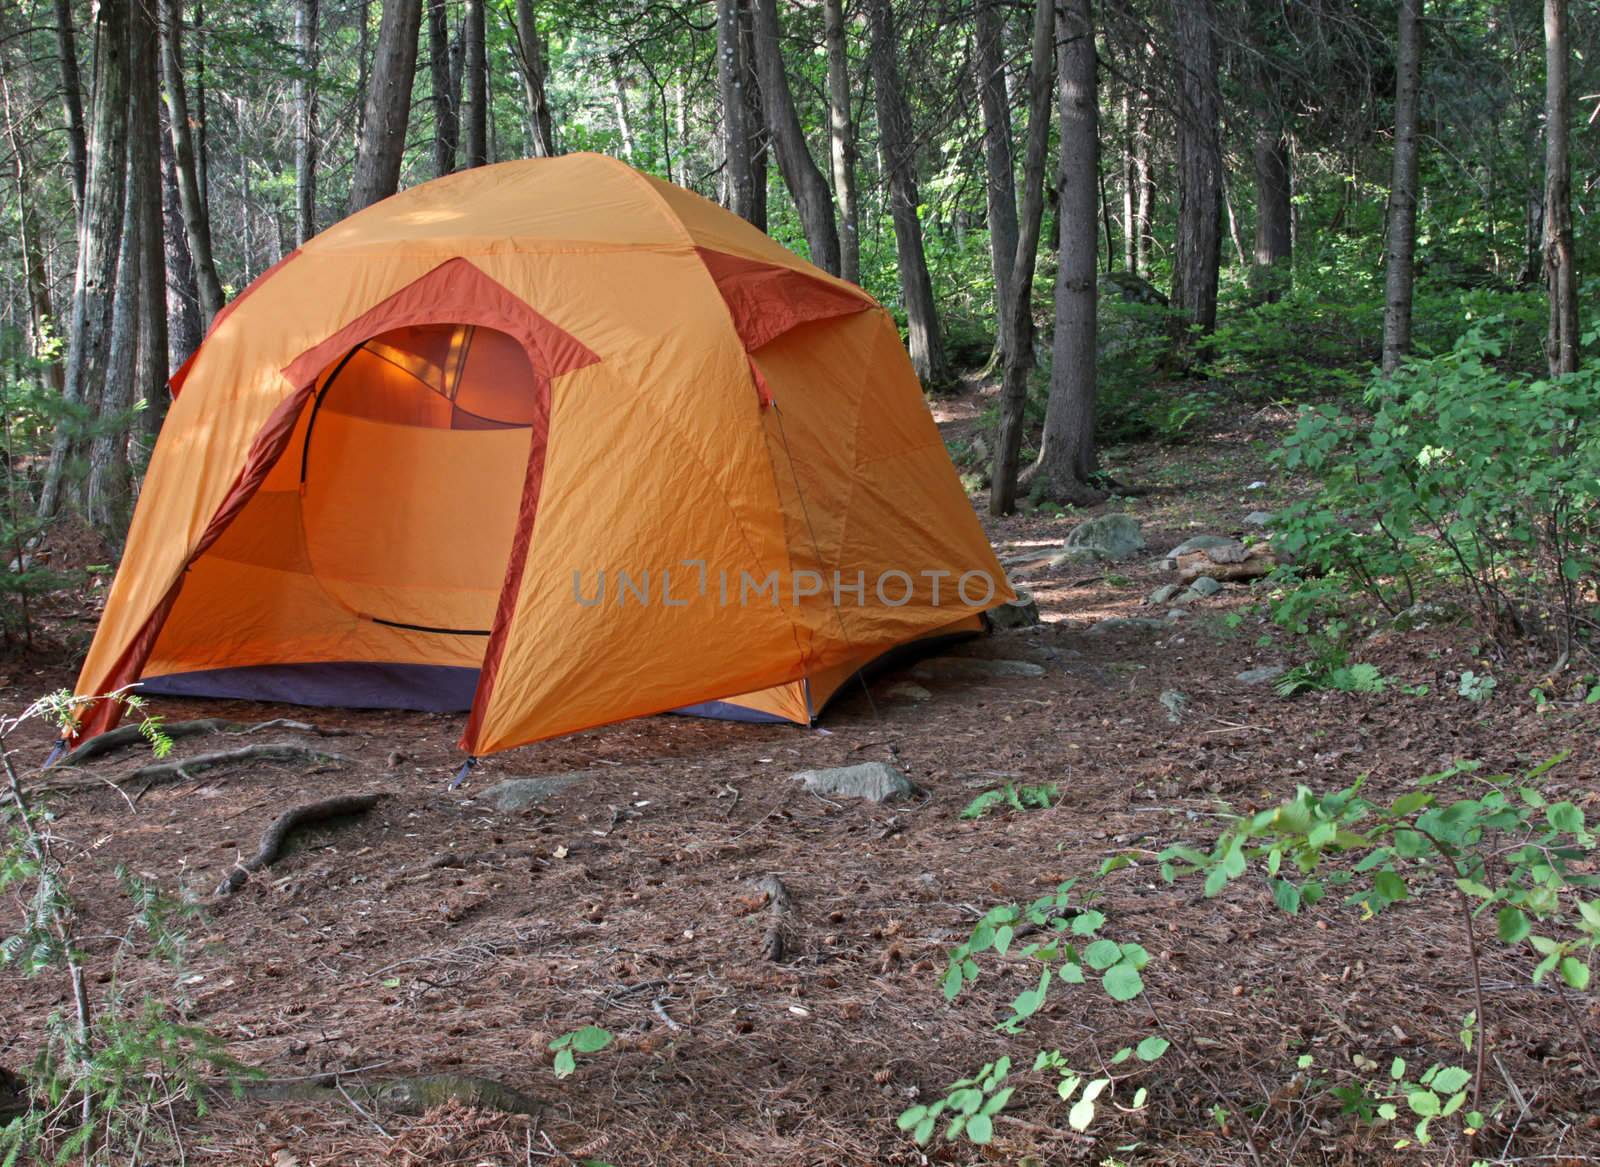 An orange tent sitting in Algonquin Provincial Park in Ontario, Canada.
